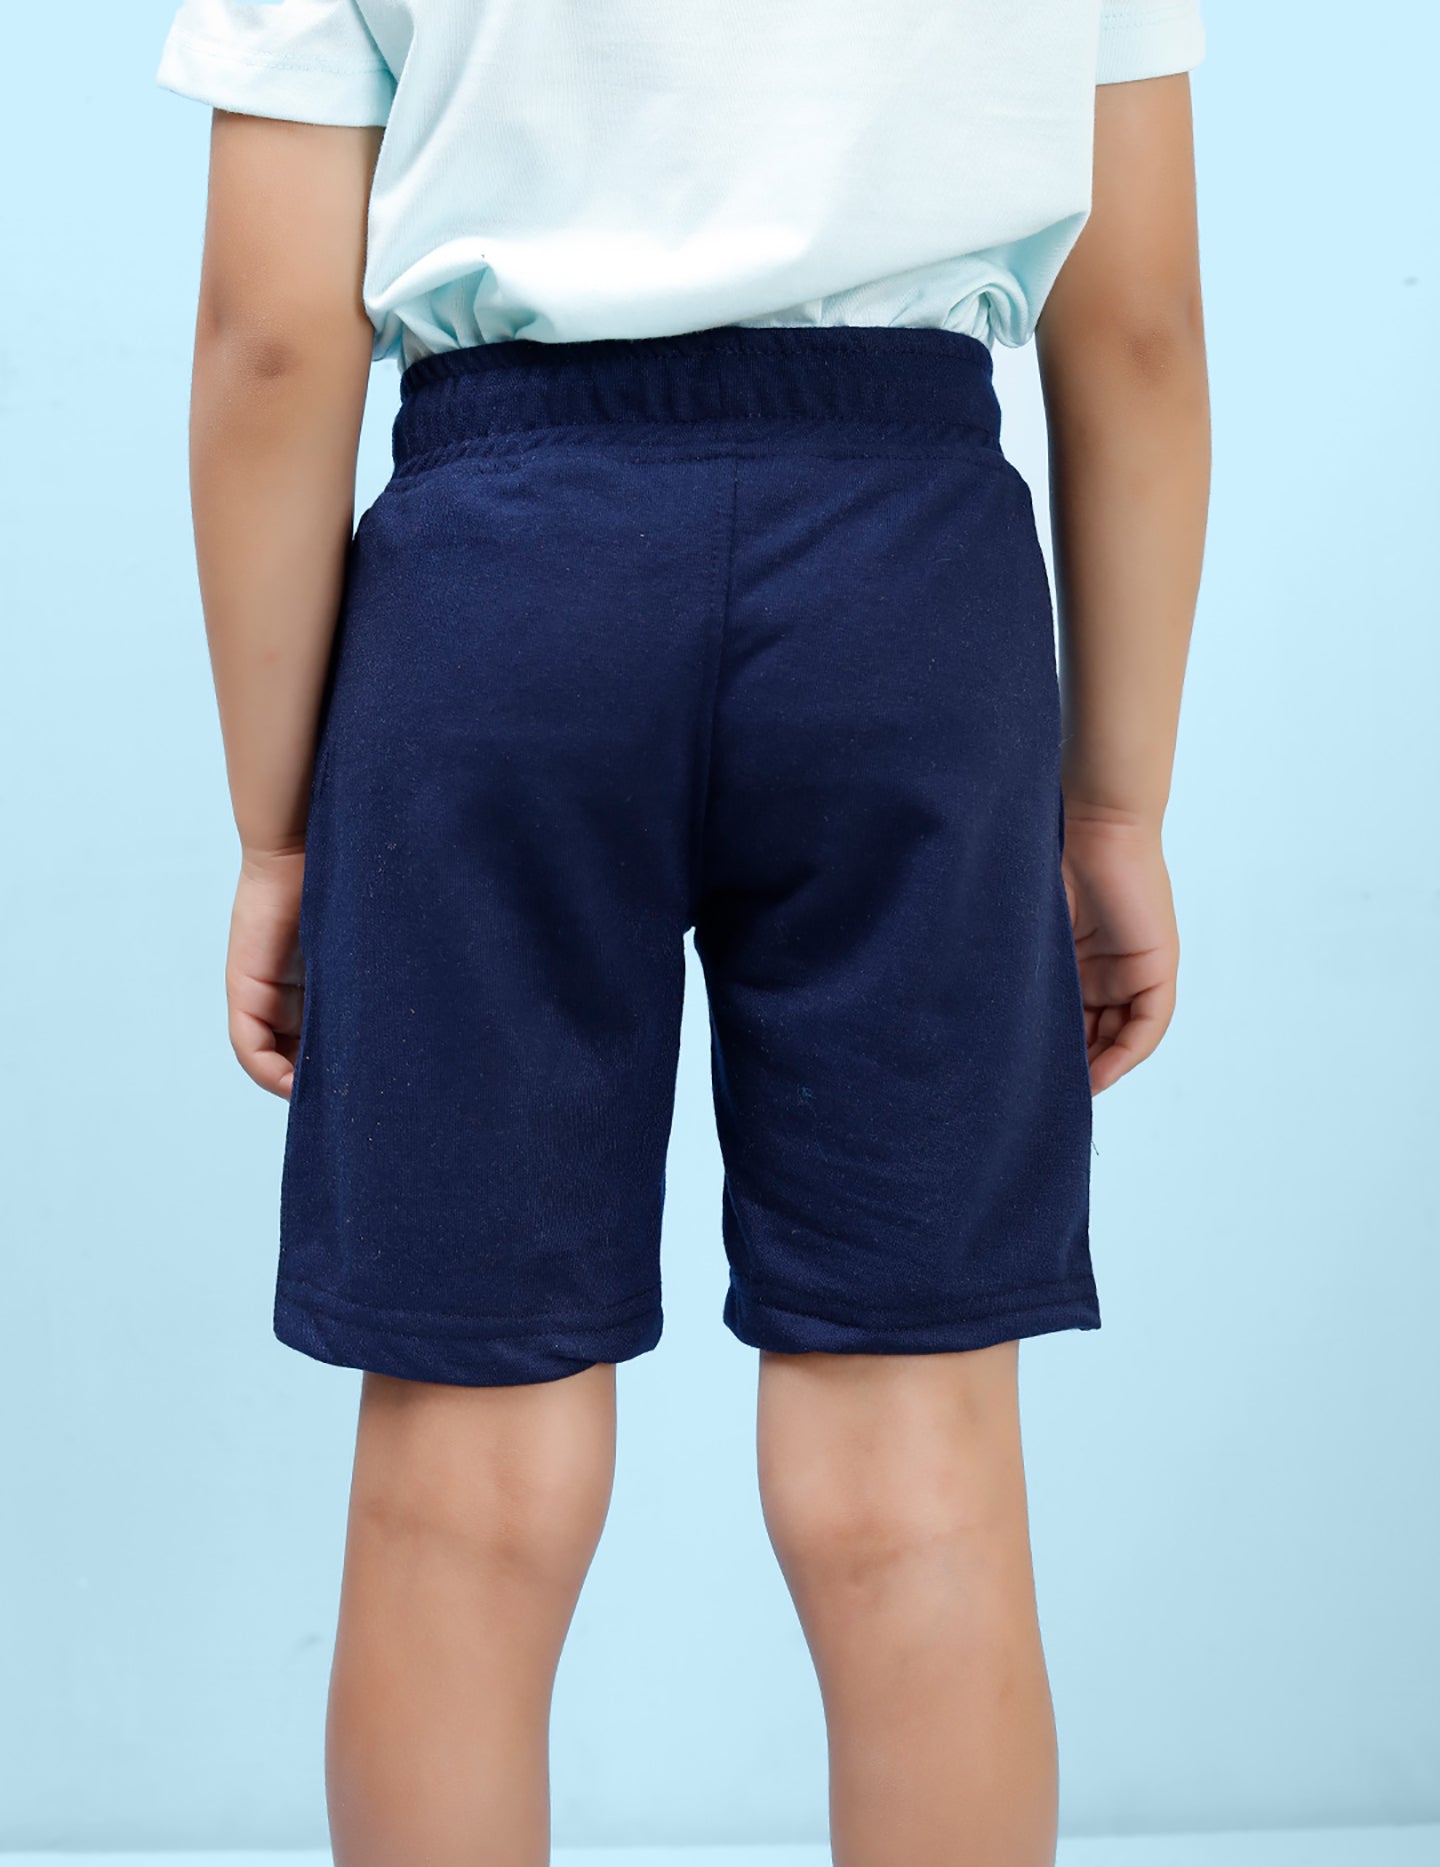 Nusyl Chall enges Printed Navy Blue Boys Shorts